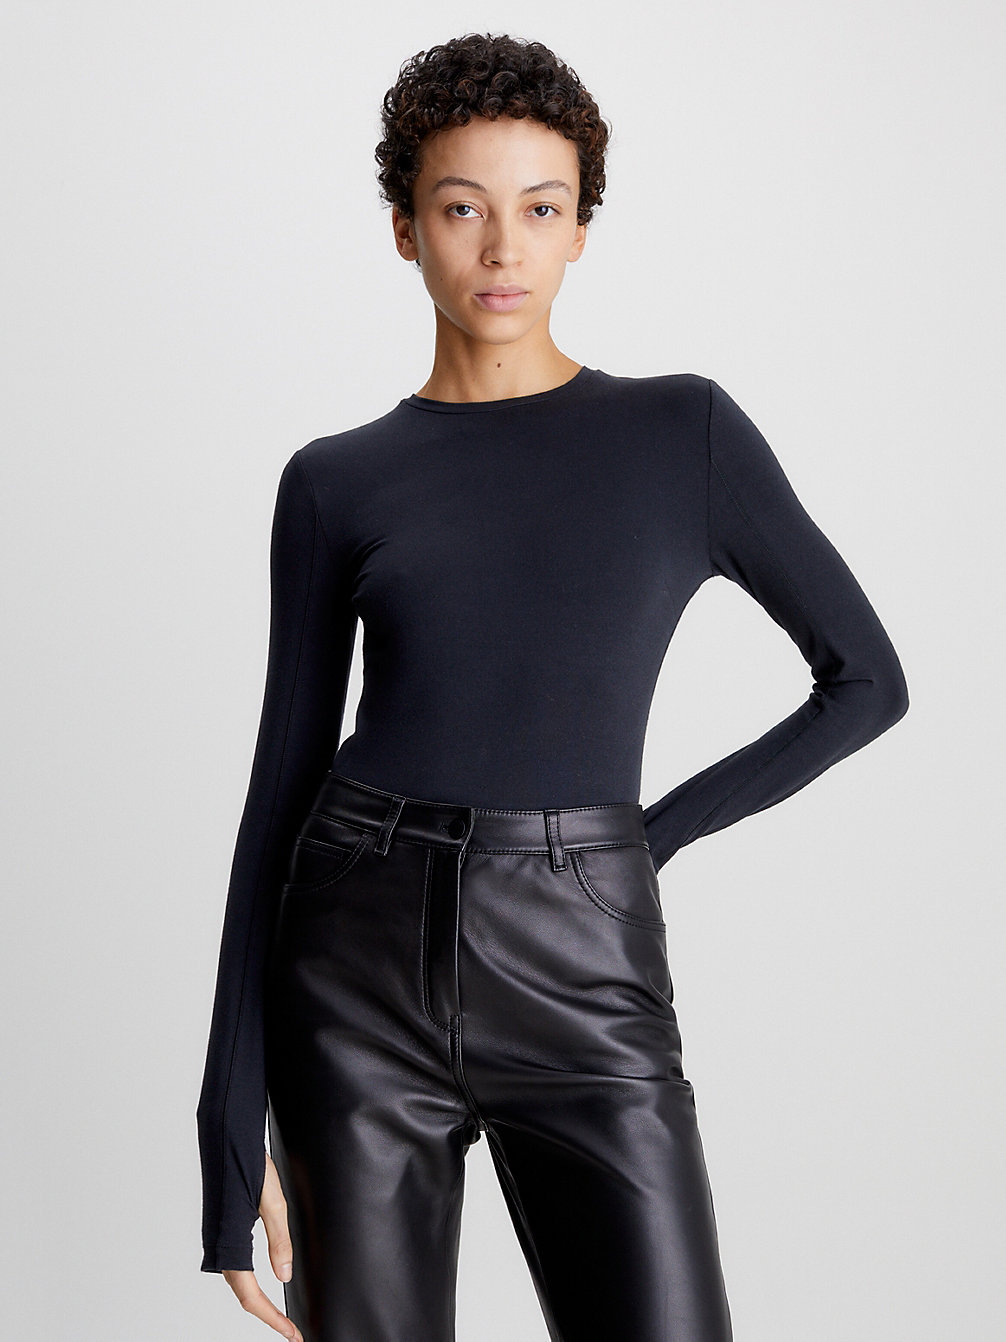 CK BLACK Long Sleeve Stretch Bodysuit undefined women Calvin Klein